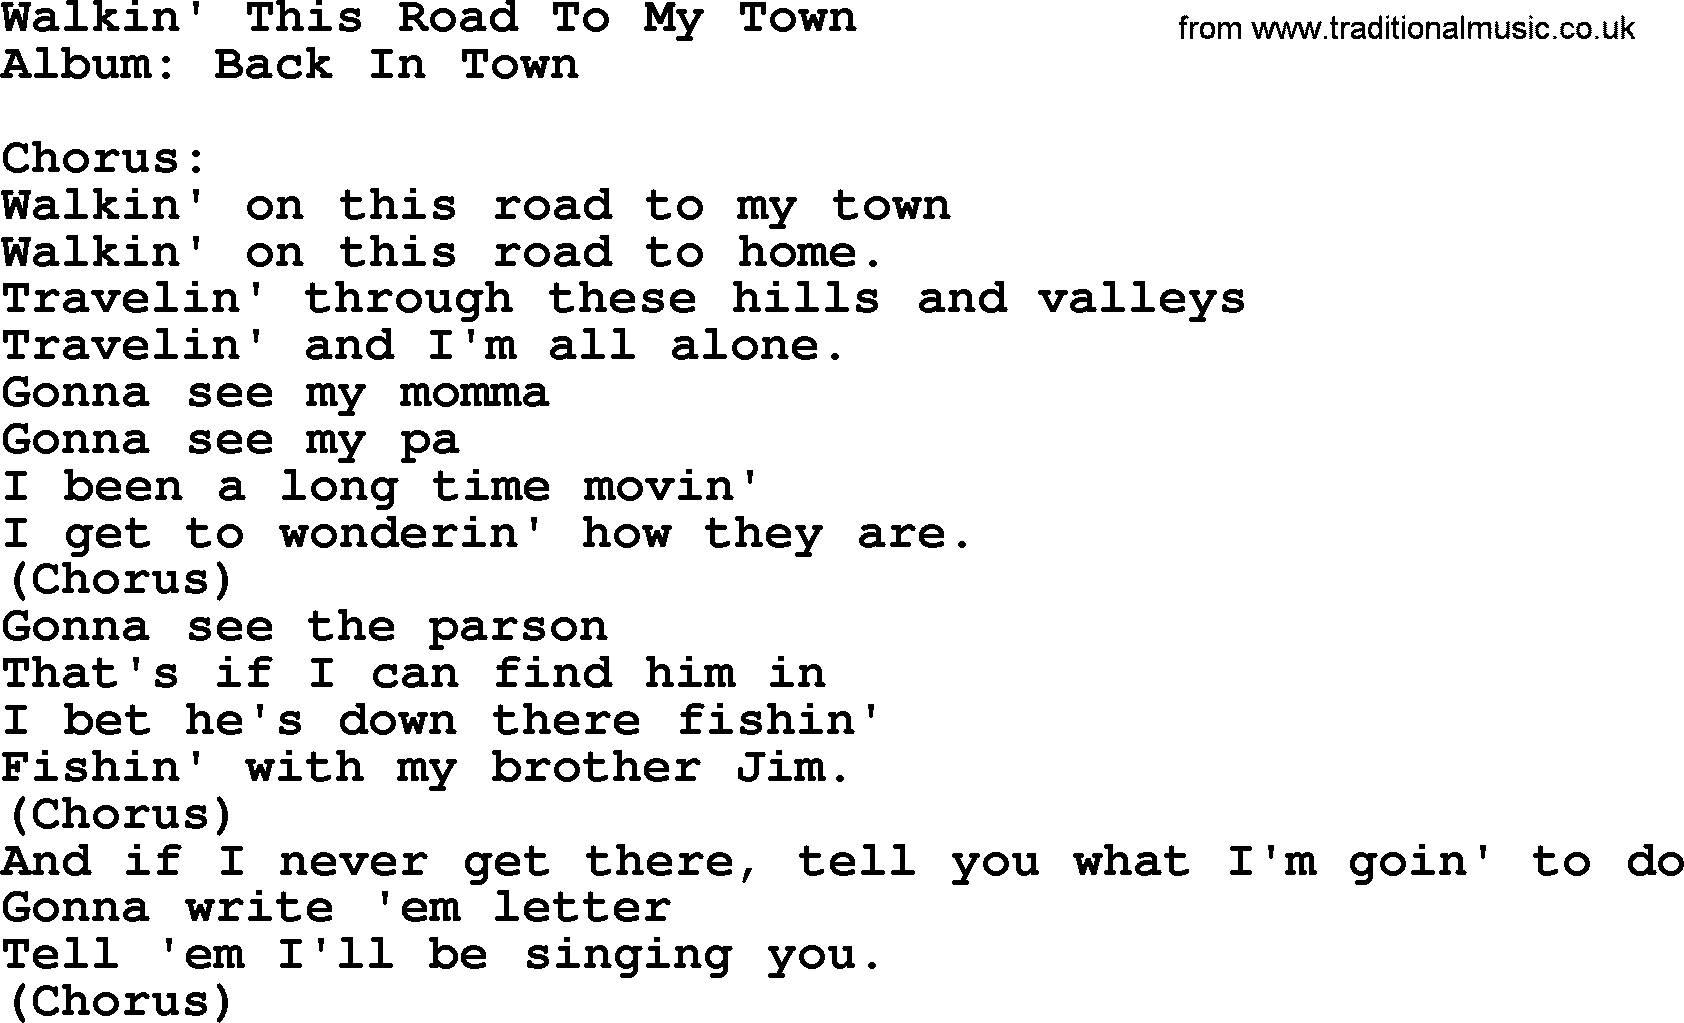 Kingston Trio song Walkin' This Road To My Town, lyrics